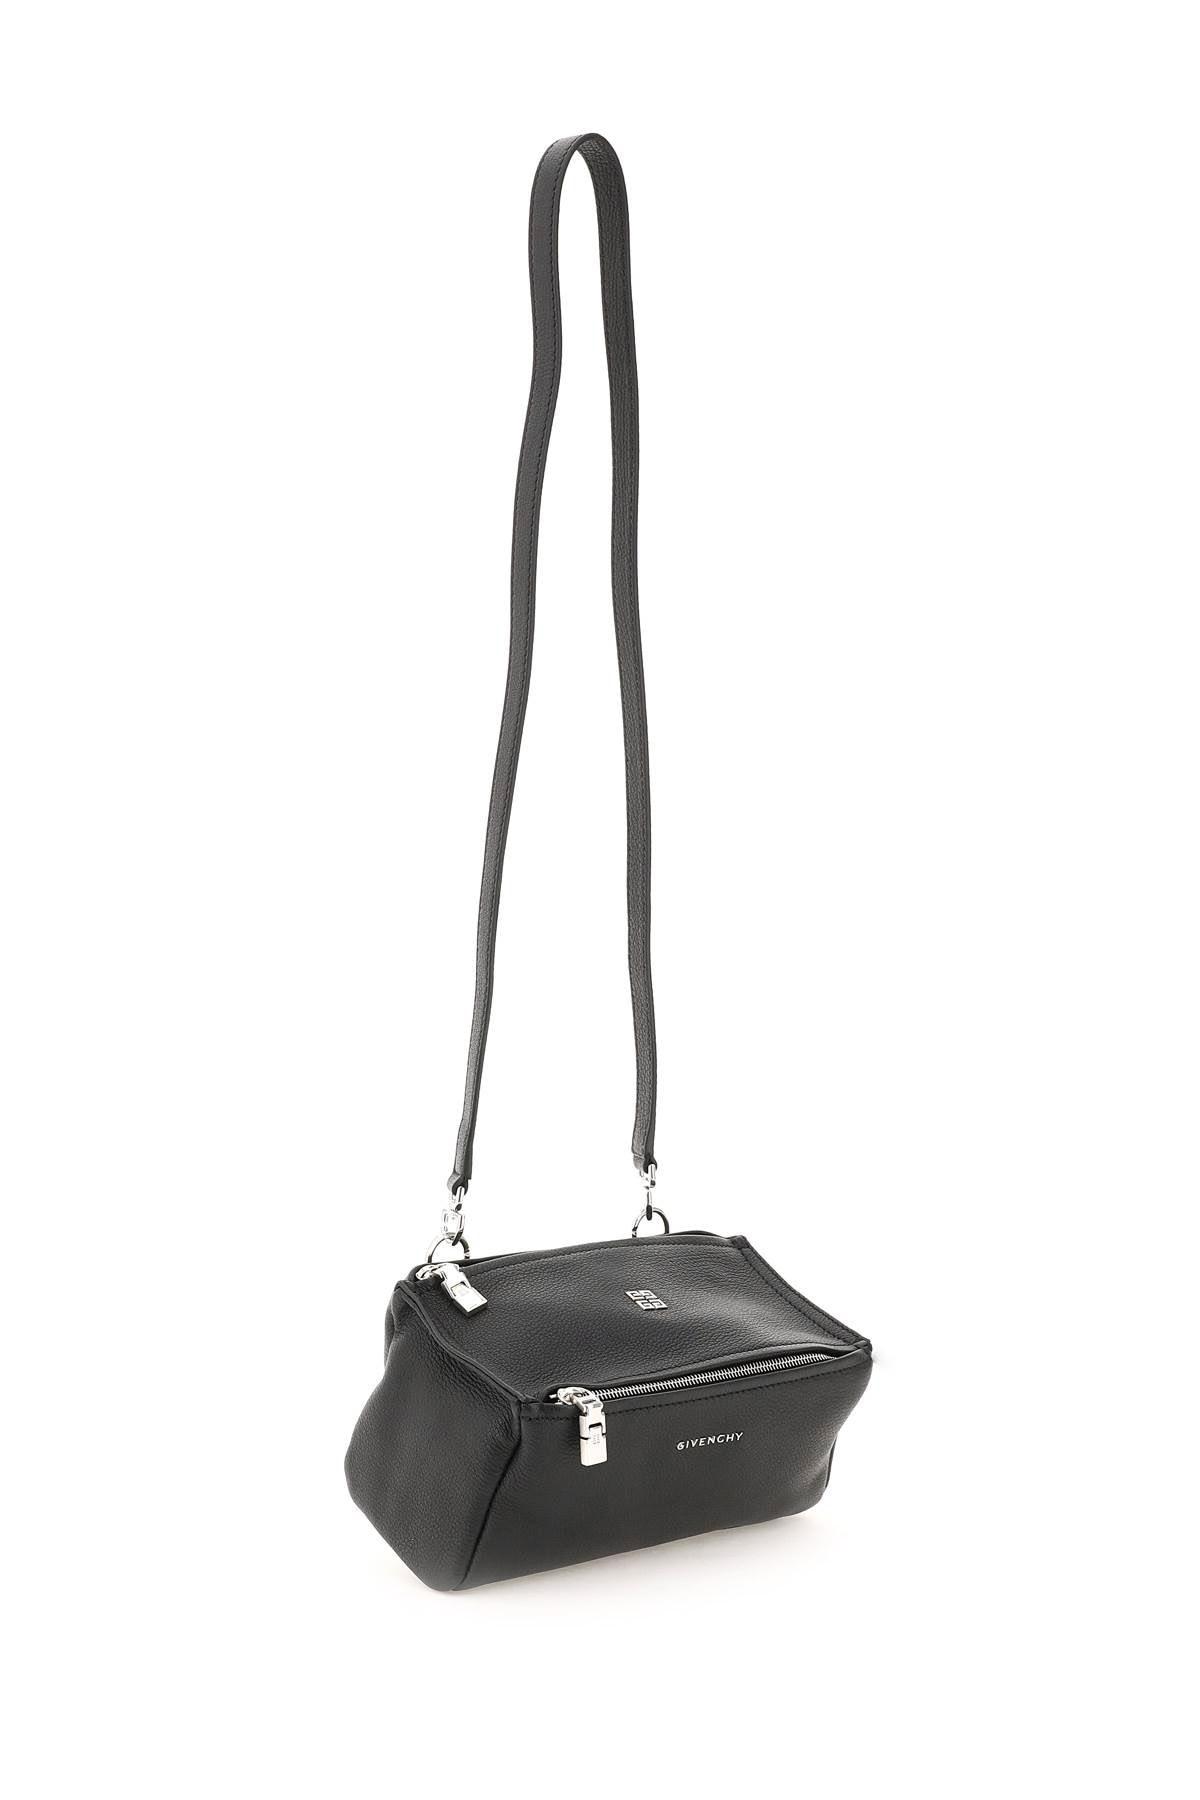 Givenchy Pandora Mini Bag in Black | Lyst